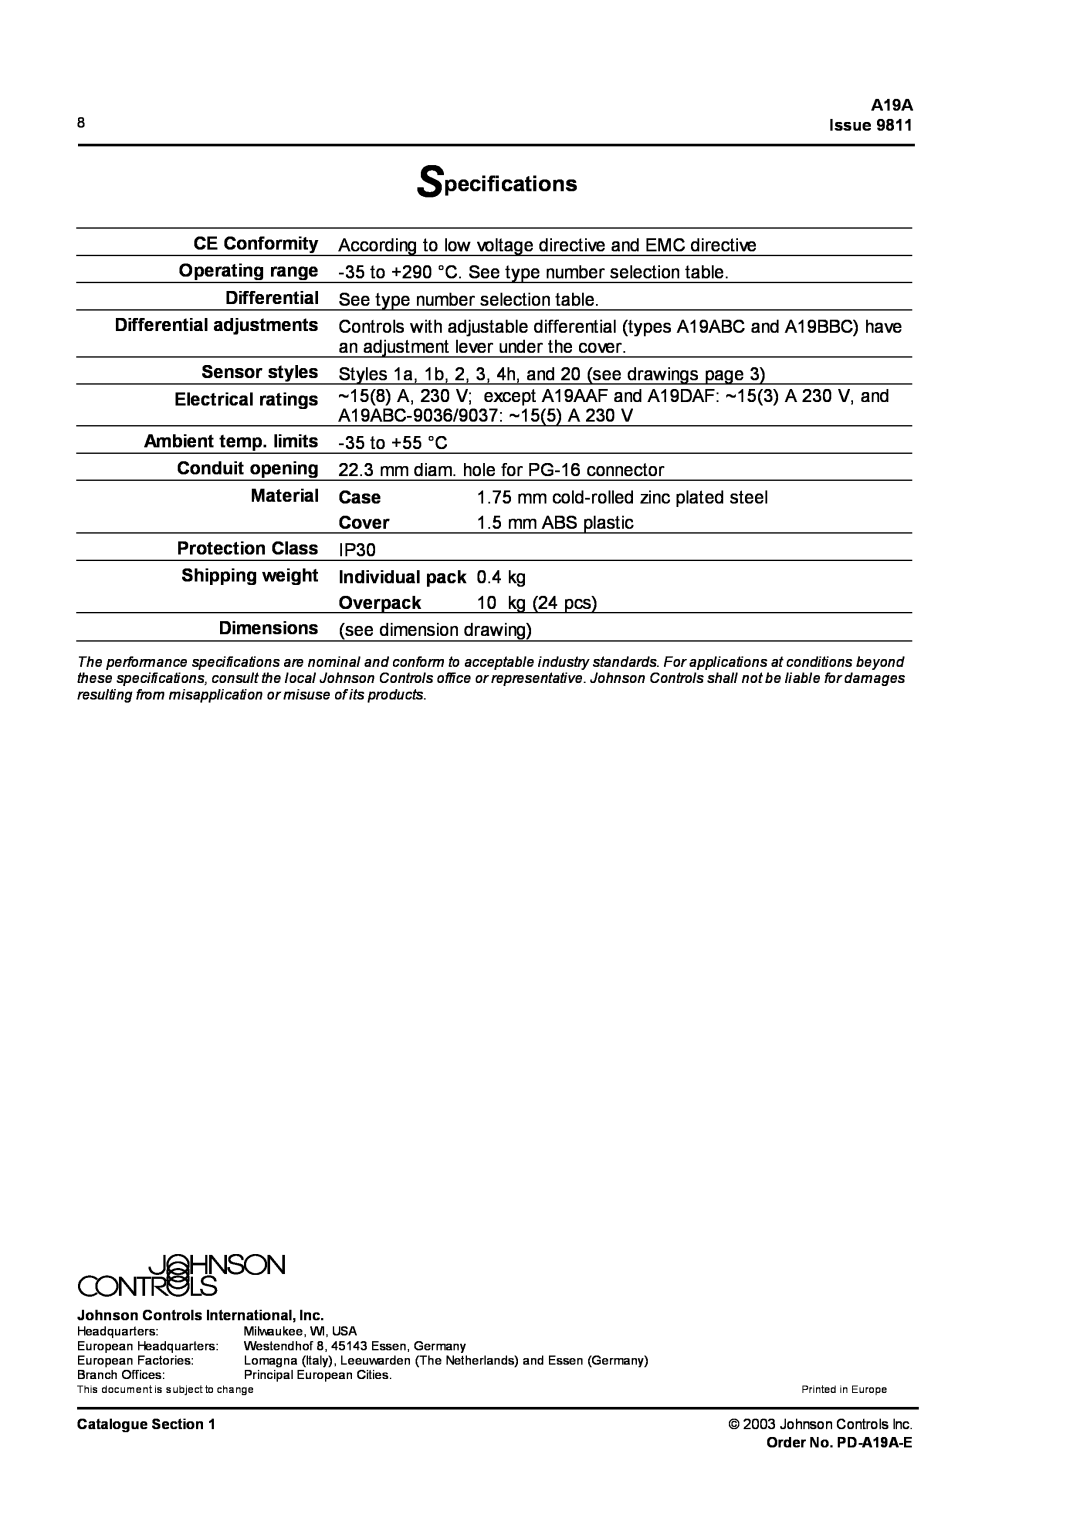 Johnson Controls A19A, A19D, A19B manual Specifications 